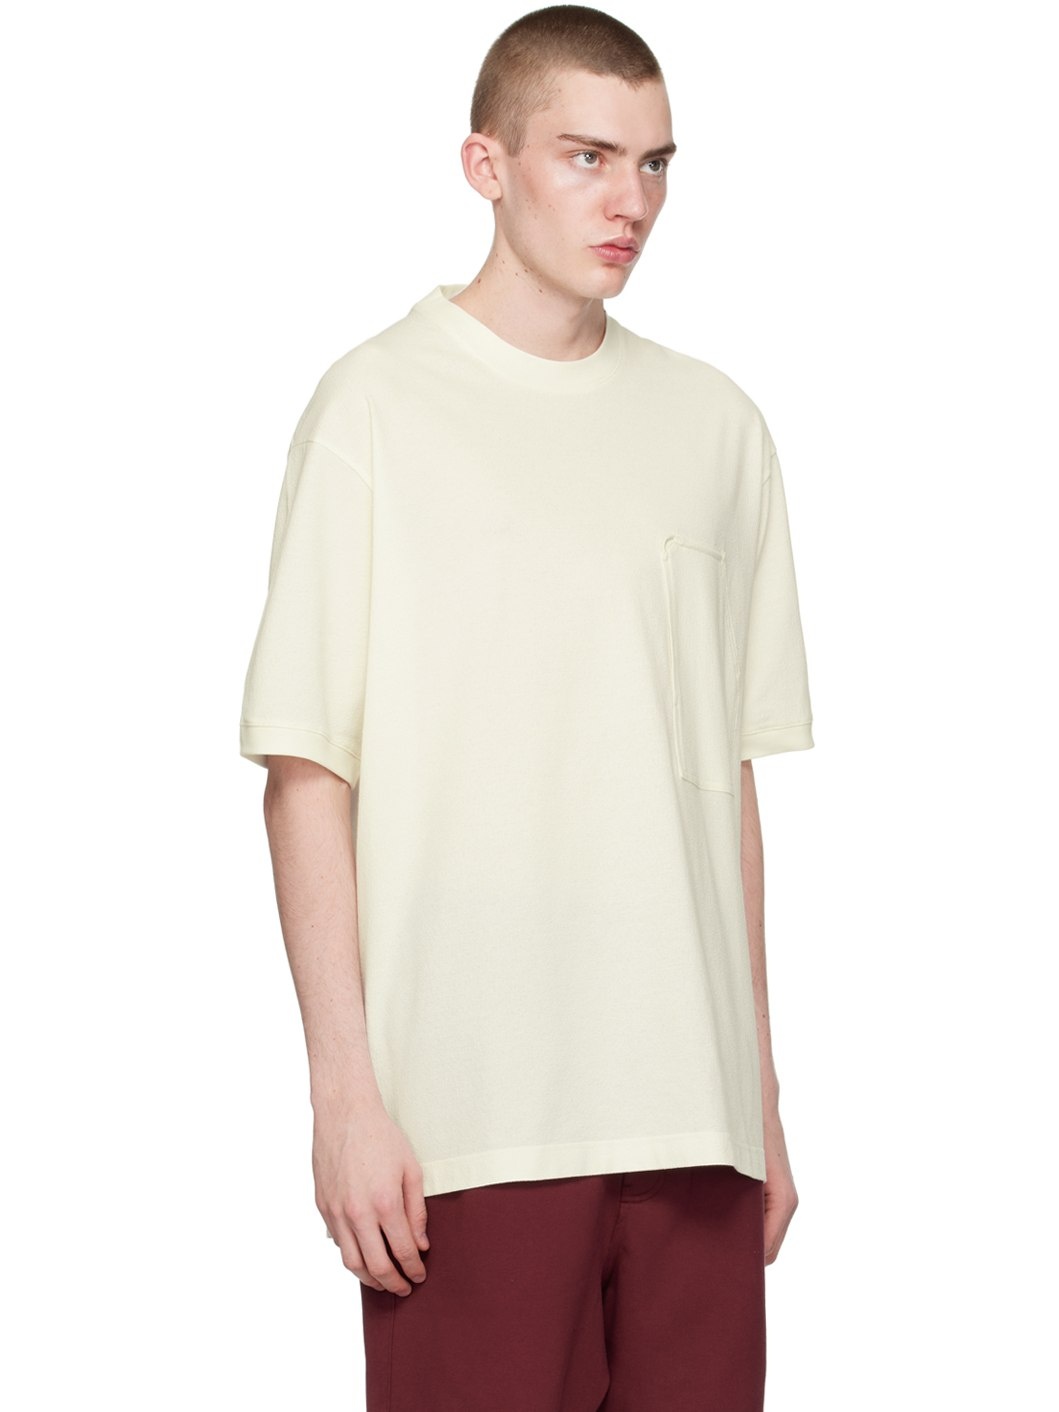 Off-White Workwear T-Shirt - 2